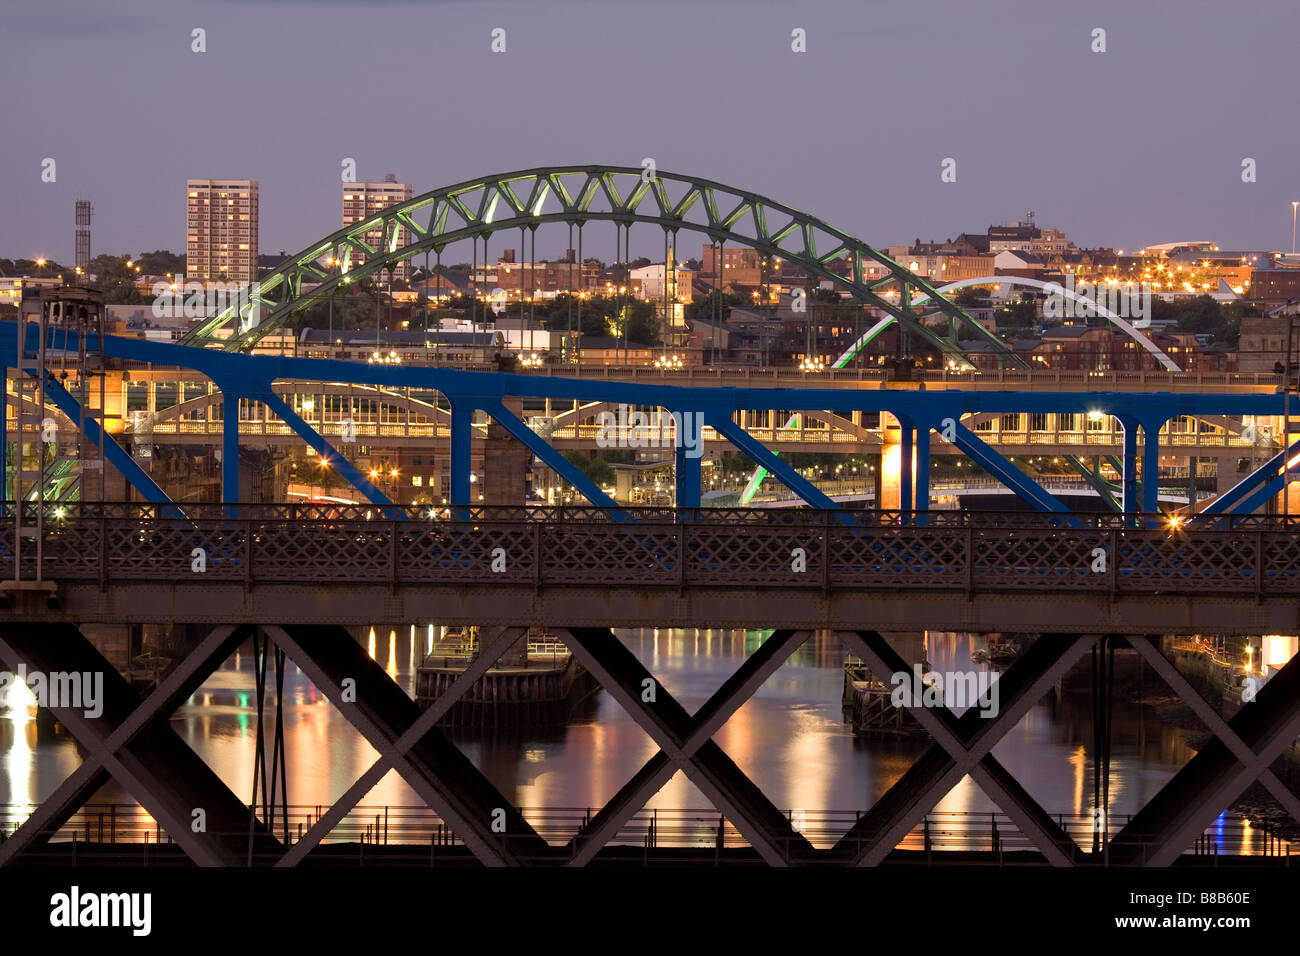 Bridges of the Tyne, Newcastle Gateshead.  King Edwards VI Bridge, Queen Elizabeth Bridge, Tyne Bridge and Millennium Bridge Stock Photo